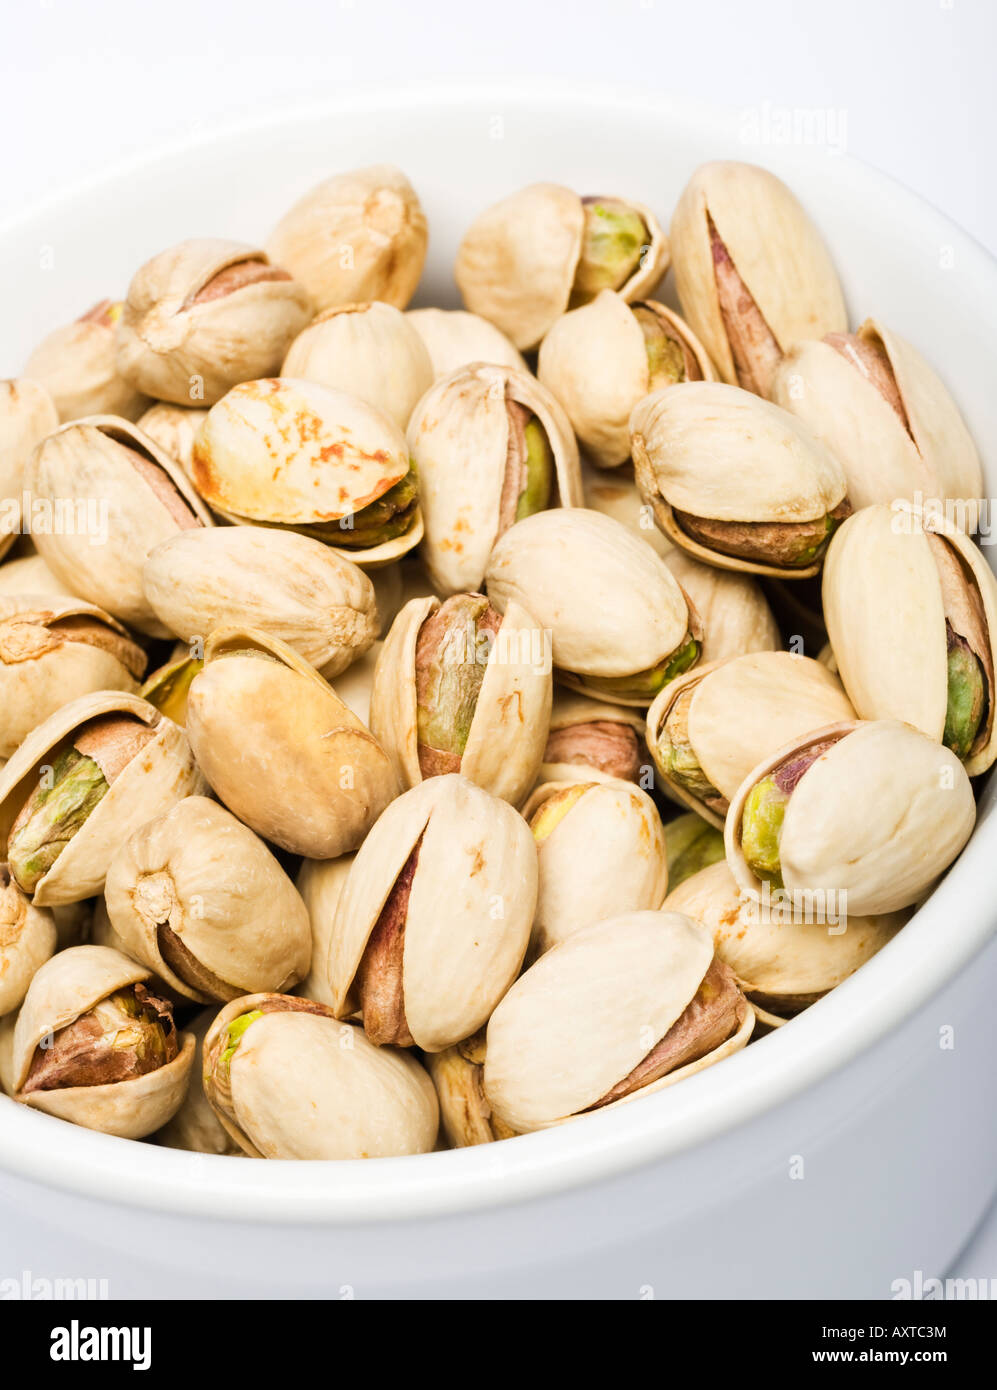 https://c8.alamy.com/comp/AXTC3M/pistachios-in-a-white-bowl-close-up-AXTC3M.jpg